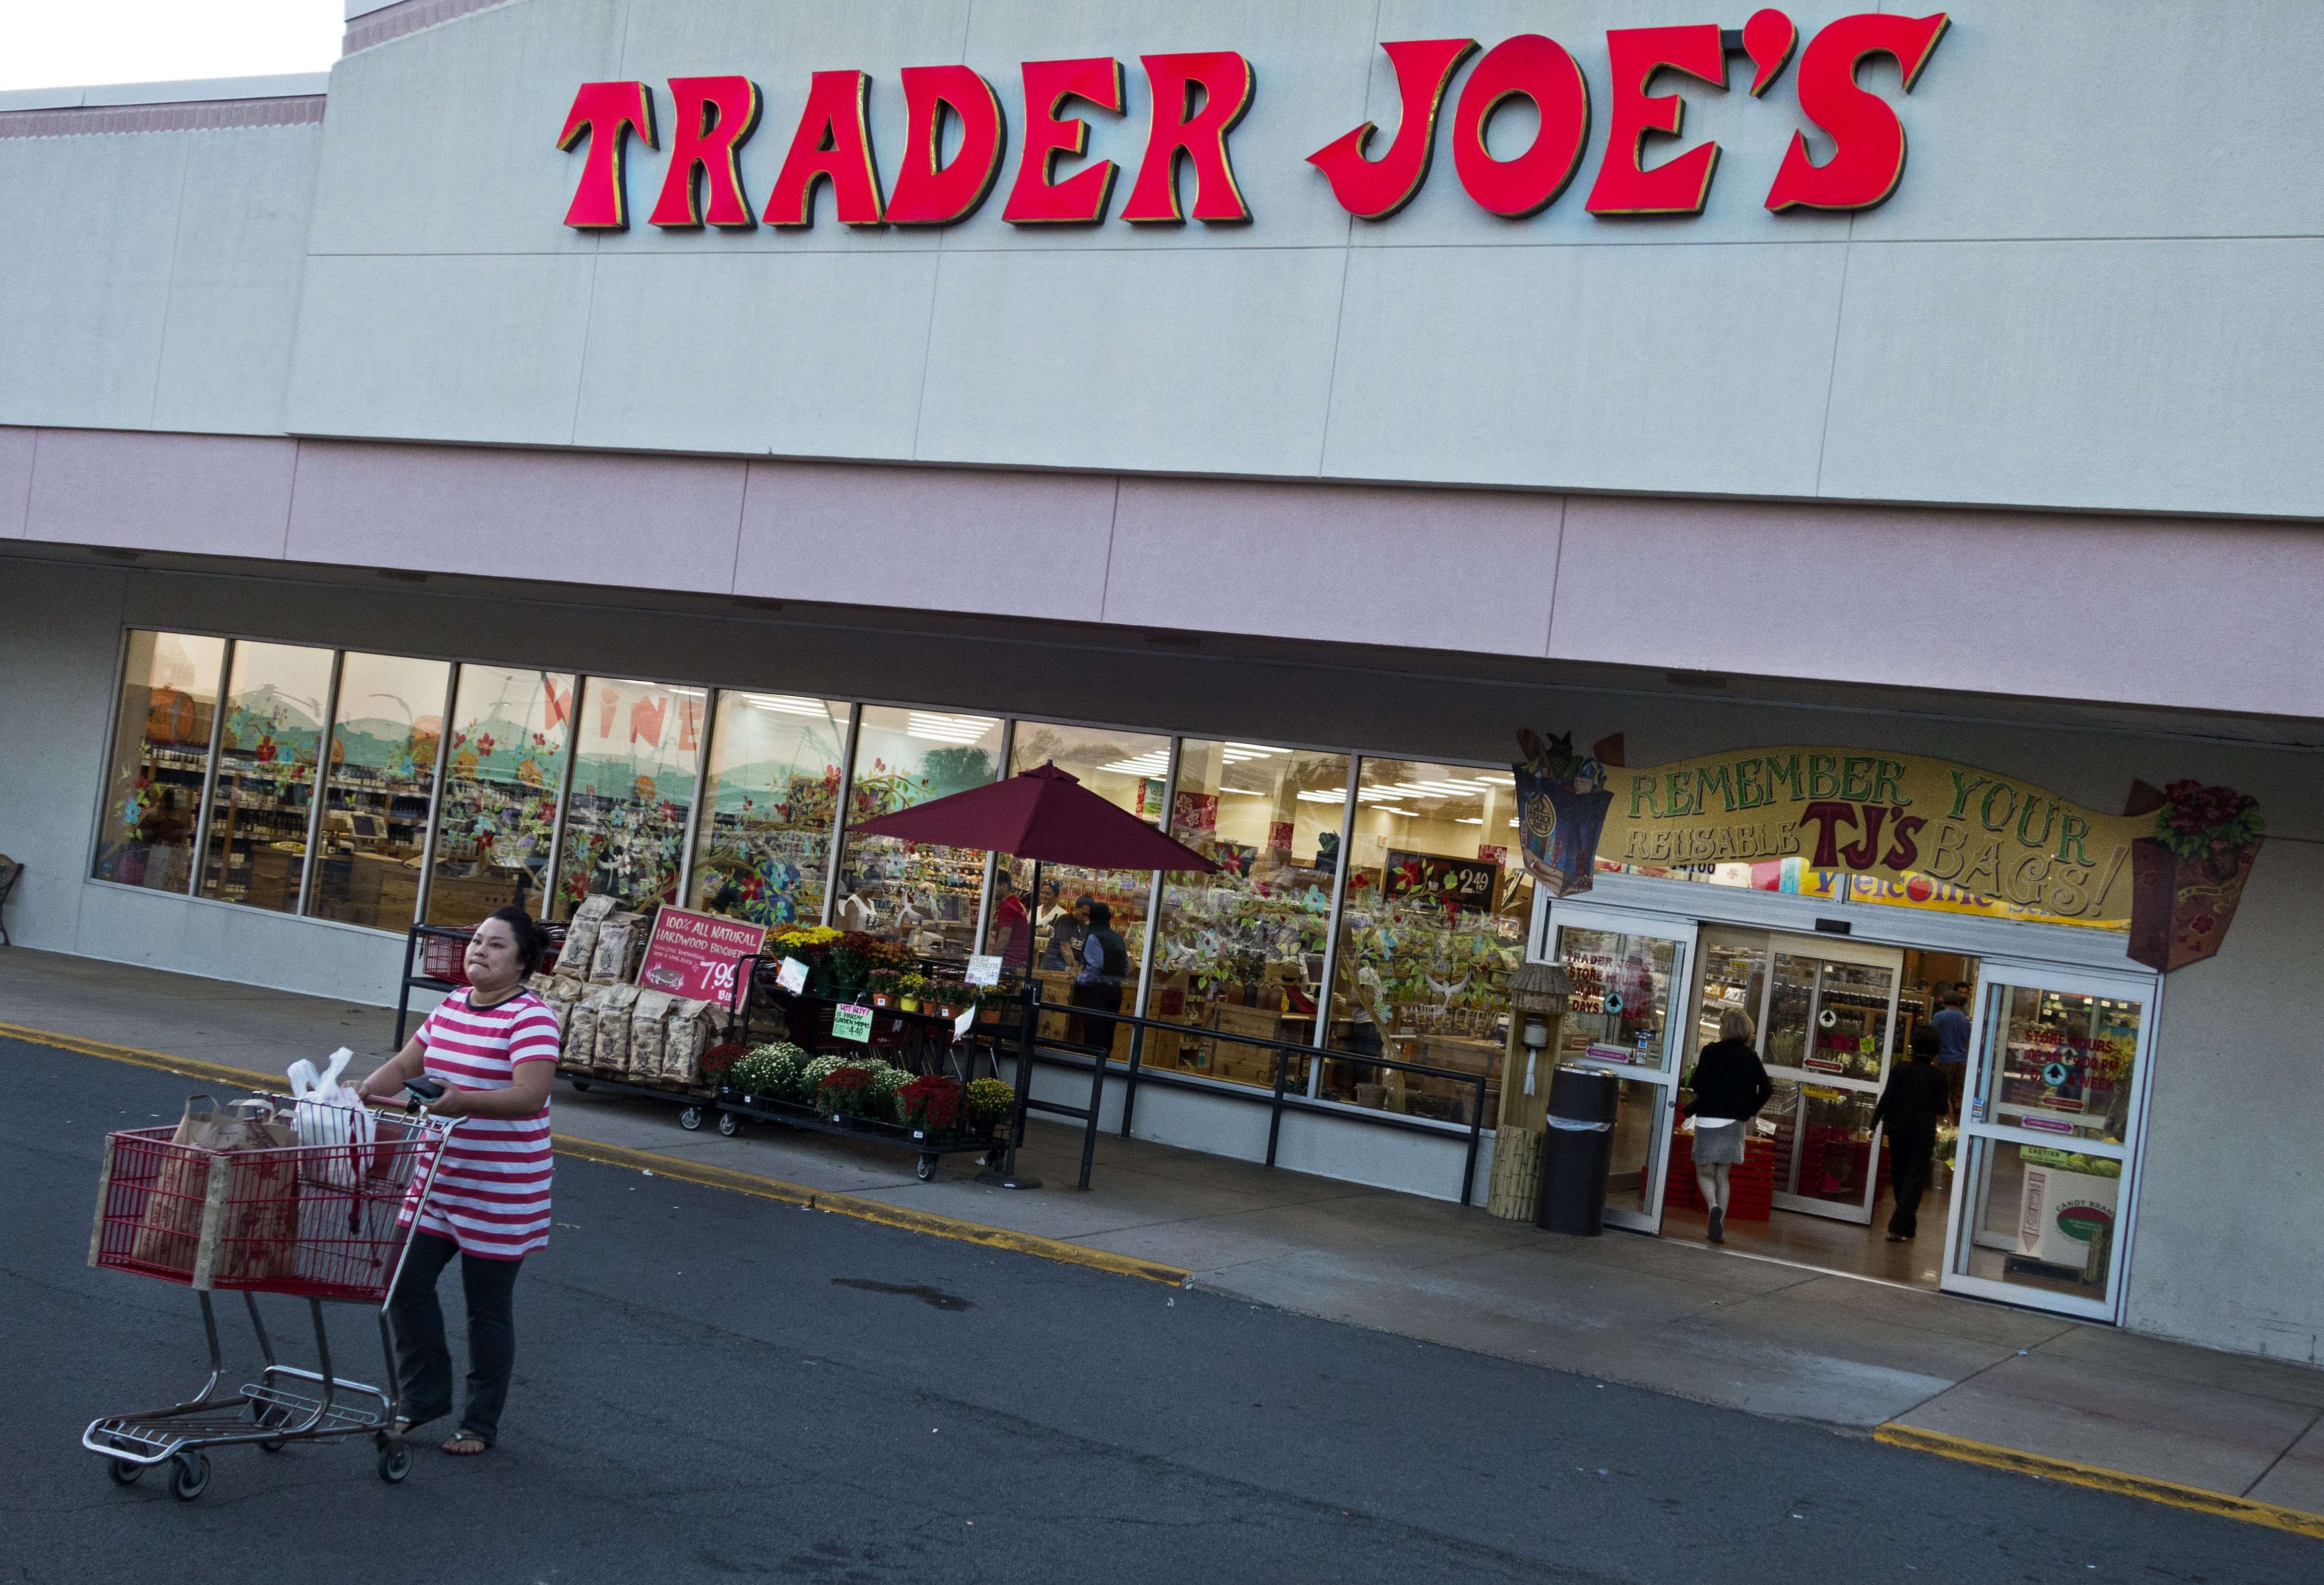 Recall alert: Fuji Food sushi and salads recalled from Trader Joe's